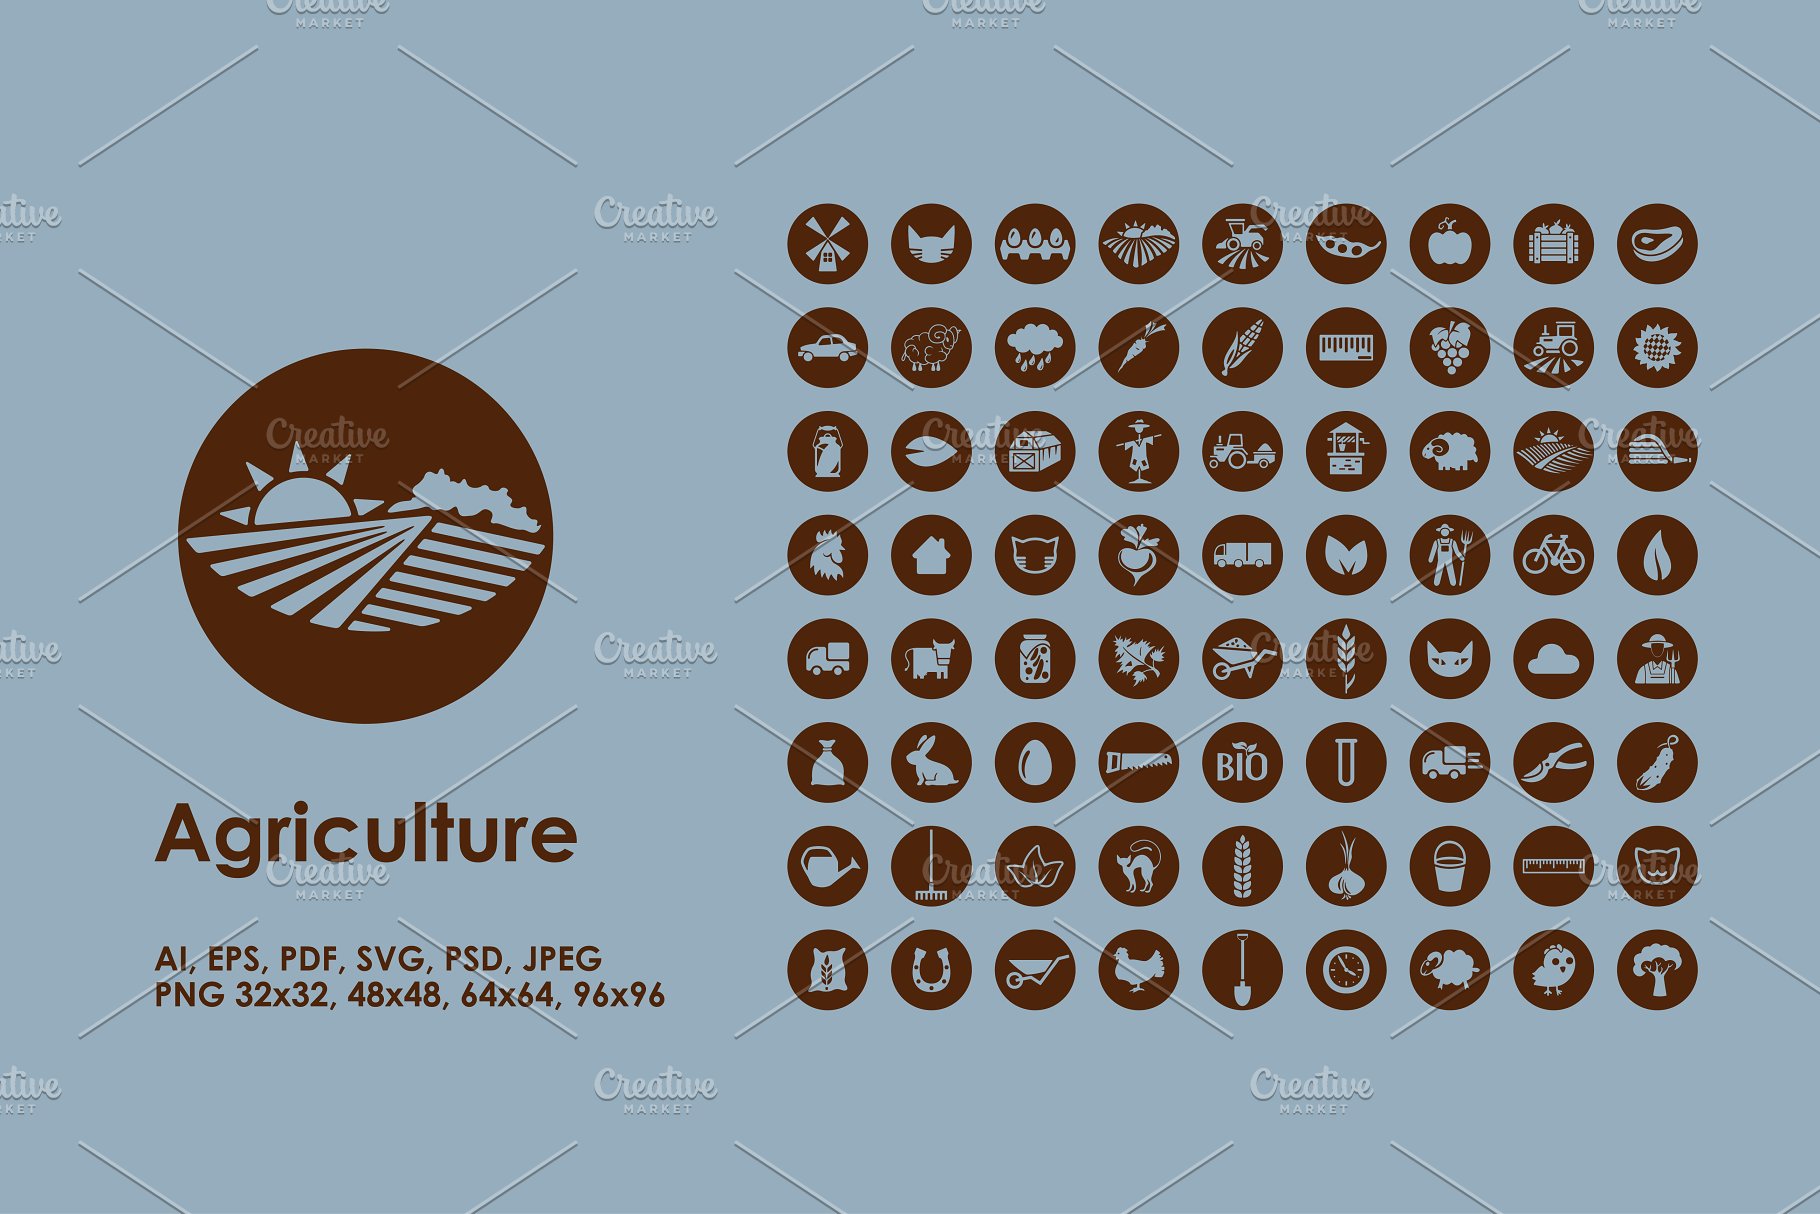 农业矢量图标下载 Agriculture icons #13